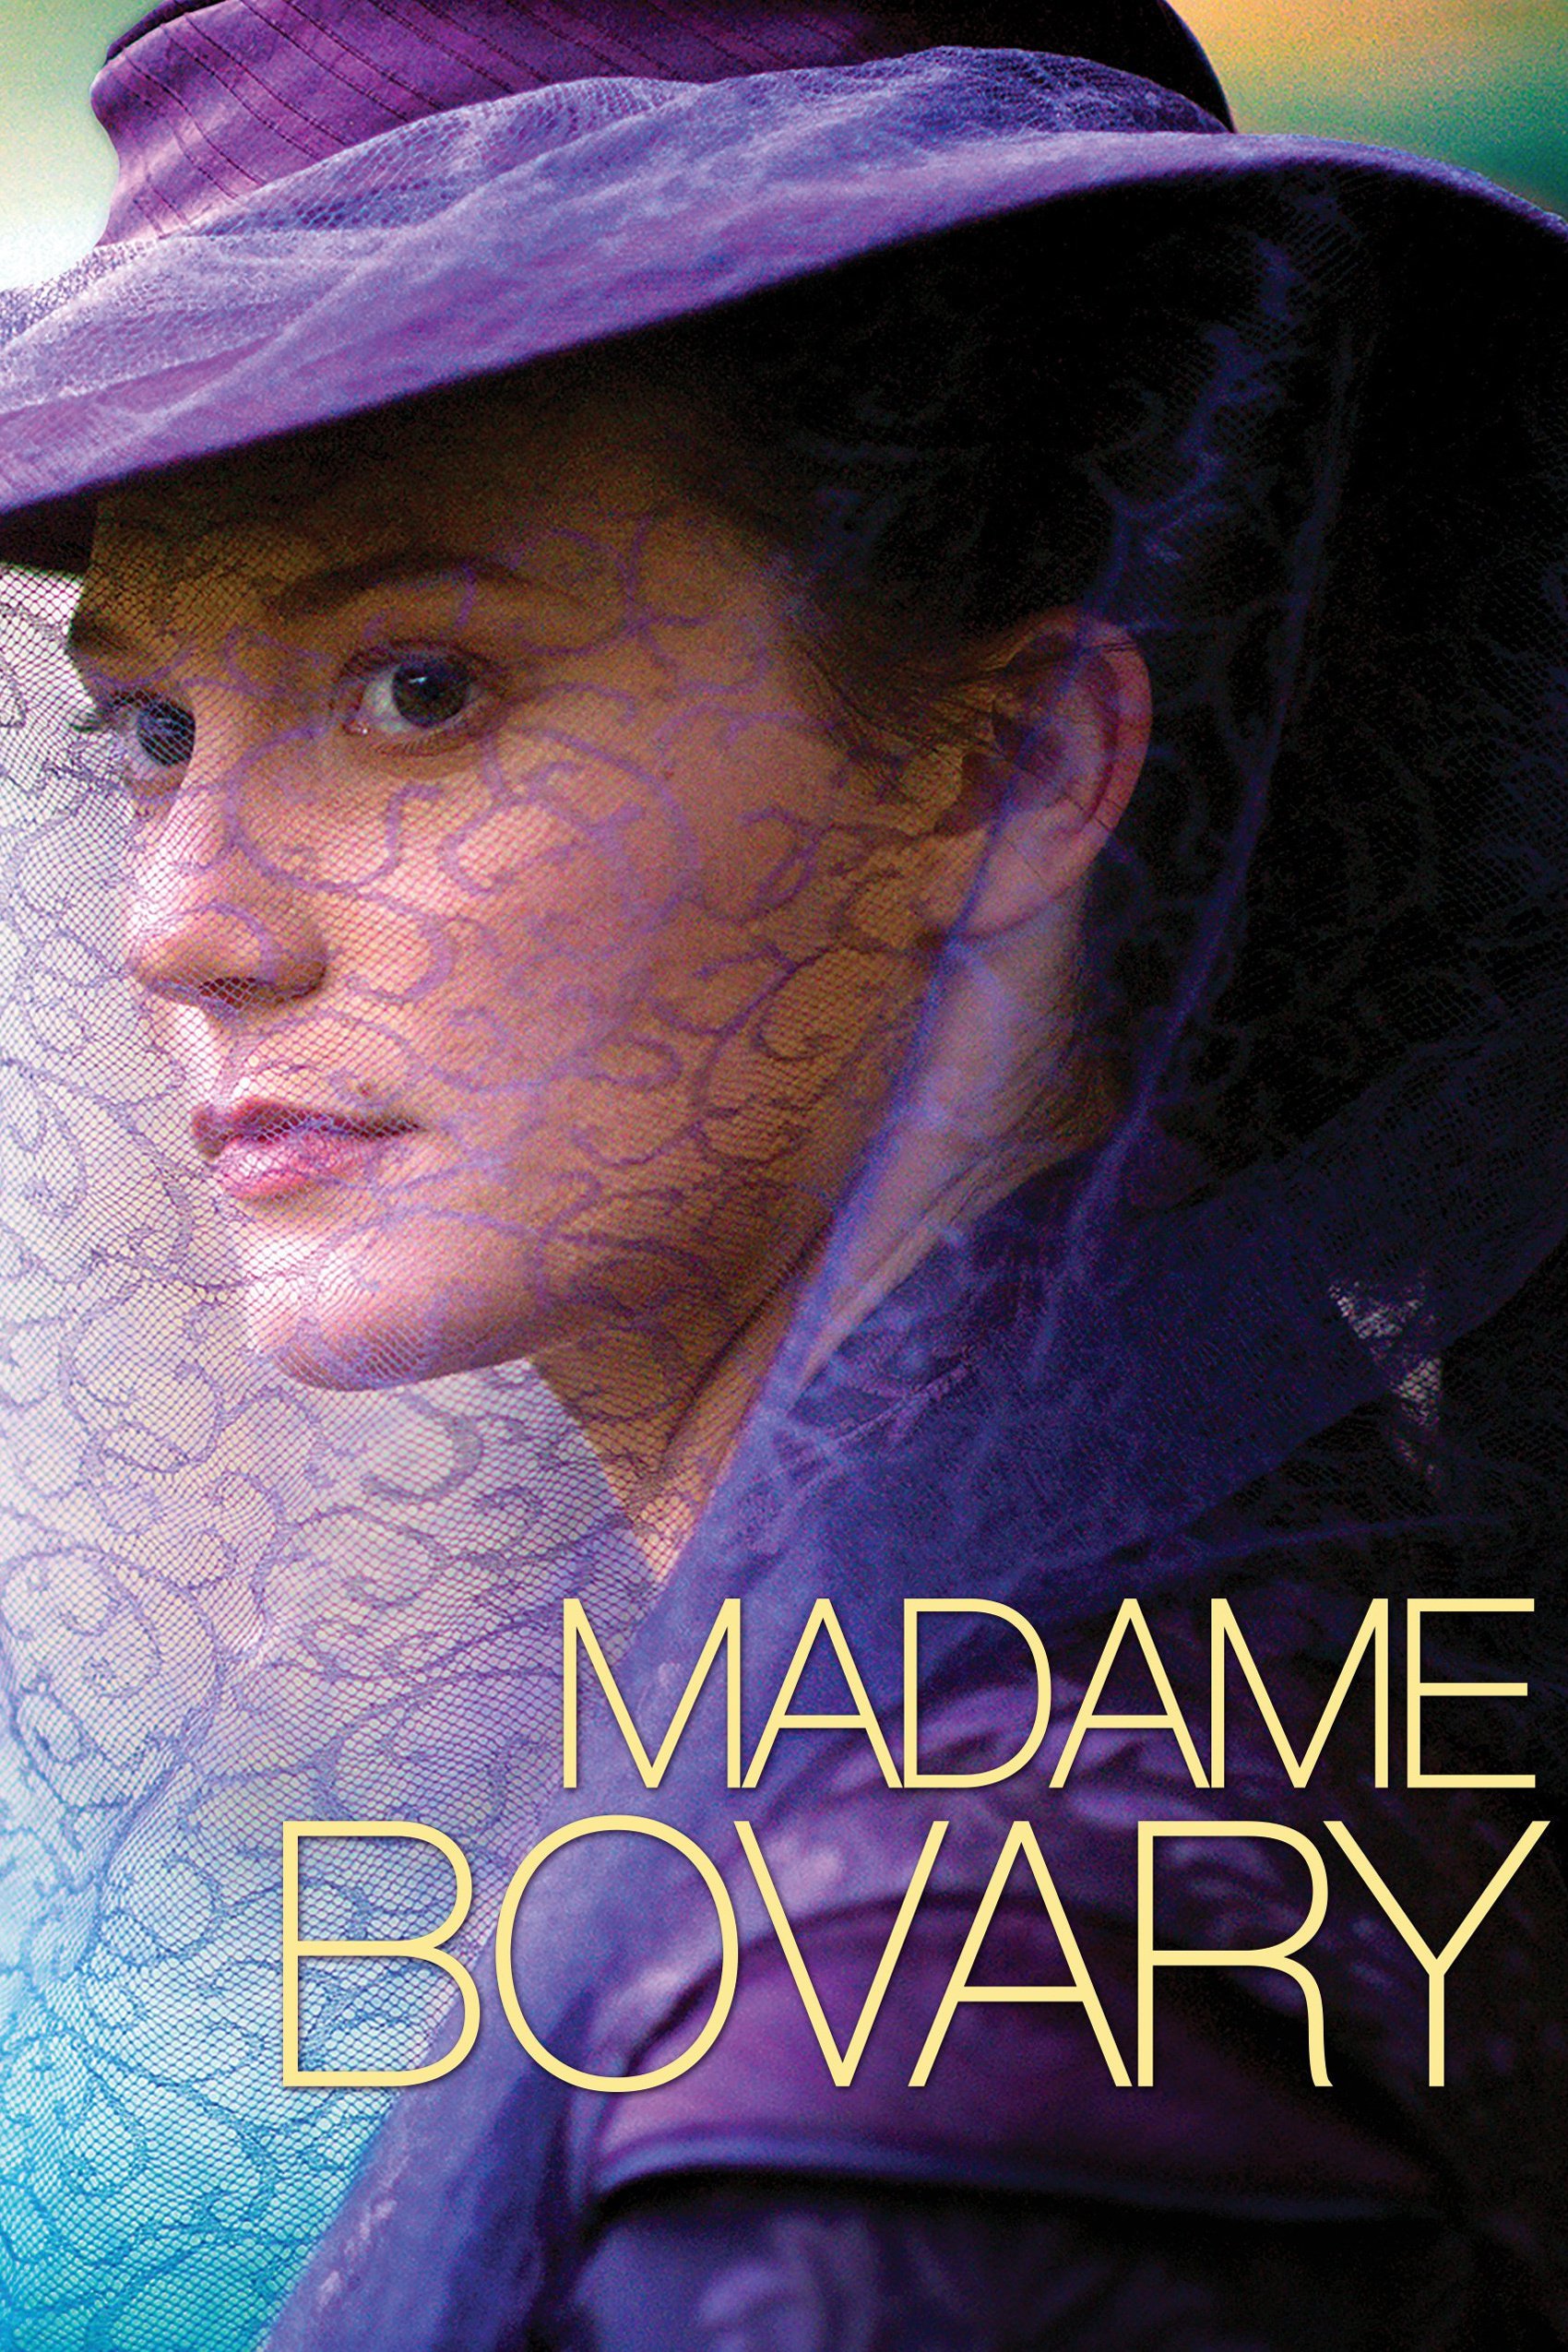 Plakat von "Madame Bovary"